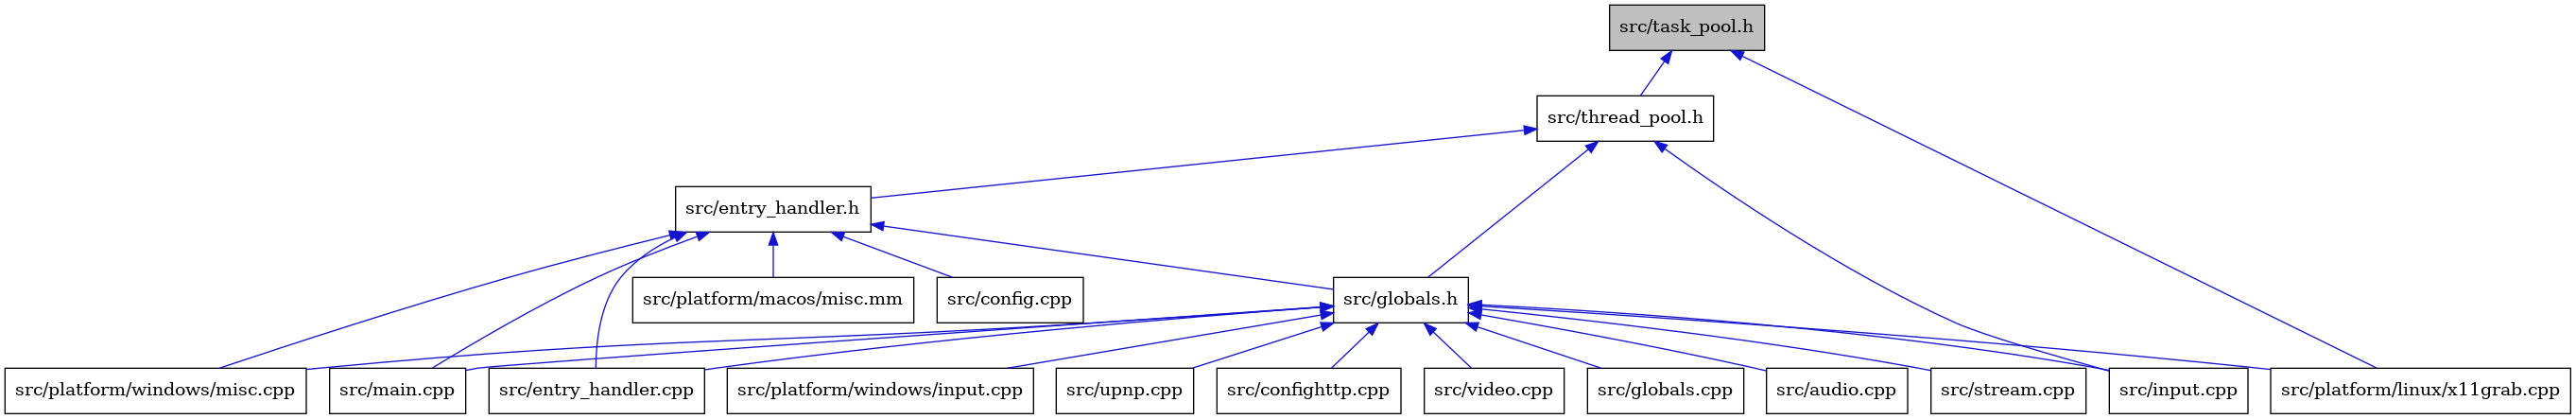 digraph {
    graph [bgcolor="#00000000"]
    node [shape=rectangle style=filled fillcolor="#FFFFFF" font=Helvetica padding=2]
    edge [color="#1414CE"]
    "11" [label="src/main.cpp" tooltip="src/main.cpp"]
    "13" [label="src/platform/windows/input.cpp" tooltip="src/platform/windows/input.cpp"]
    "12" [label="src/input.cpp" tooltip="src/input.cpp"]
    "6" [label="src/entry_handler.cpp" tooltip="src/entry_handler.cpp"]
    "18" [label="src/platform/macos/misc.mm" tooltip="src/platform/macos/misc.mm"]
    "7" [label="src/globals.h" tooltip="src/globals.h"]
    "5" [label="src/config.cpp" tooltip="src/config.cpp"]
    "1" [label="src/task_pool.h" tooltip="src/task_pool.h" fillcolor="#BFBFBF"]
    "3" [label="src/thread_pool.h" tooltip="src/thread_pool.h"]
    "16" [label="src/upnp.cpp" tooltip="src/upnp.cpp"]
    "14" [label="src/platform/windows/misc.cpp" tooltip="src/platform/windows/misc.cpp"]
    "9" [label="src/confighttp.cpp" tooltip="src/confighttp.cpp"]
    "17" [label="src/video.cpp" tooltip="src/video.cpp"]
    "10" [label="src/globals.cpp" tooltip="src/globals.cpp"]
    "4" [label="src/entry_handler.h" tooltip="src/entry_handler.h"]
    "8" [label="src/audio.cpp" tooltip="src/audio.cpp"]
    "15" [label="src/stream.cpp" tooltip="src/stream.cpp"]
    "2" [label="src/platform/linux/x11grab.cpp" tooltip="src/platform/linux/x11grab.cpp"]
    "7" -> "8" [dir=back tooltip="include"]
    "7" -> "9" [dir=back tooltip="include"]
    "7" -> "6" [dir=back tooltip="include"]
    "7" -> "10" [dir=back tooltip="include"]
    "7" -> "11" [dir=back tooltip="include"]
    "7" -> "12" [dir=back tooltip="include"]
    "7" -> "2" [dir=back tooltip="include"]
    "7" -> "13" [dir=back tooltip="include"]
    "7" -> "14" [dir=back tooltip="include"]
    "7" -> "15" [dir=back tooltip="include"]
    "7" -> "16" [dir=back tooltip="include"]
    "7" -> "17" [dir=back tooltip="include"]
    "1" -> "2" [dir=back tooltip="include"]
    "1" -> "3" [dir=back tooltip="include"]
    "3" -> "4" [dir=back tooltip="include"]
    "3" -> "7" [dir=back tooltip="include"]
    "3" -> "12" [dir=back tooltip="include"]
    "4" -> "5" [dir=back tooltip="include"]
    "4" -> "6" [dir=back tooltip="include"]
    "4" -> "7" [dir=back tooltip="include"]
    "4" -> "11" [dir=back tooltip="include"]
    "4" -> "18" [dir=back tooltip="include"]
    "4" -> "14" [dir=back tooltip="include"]
}